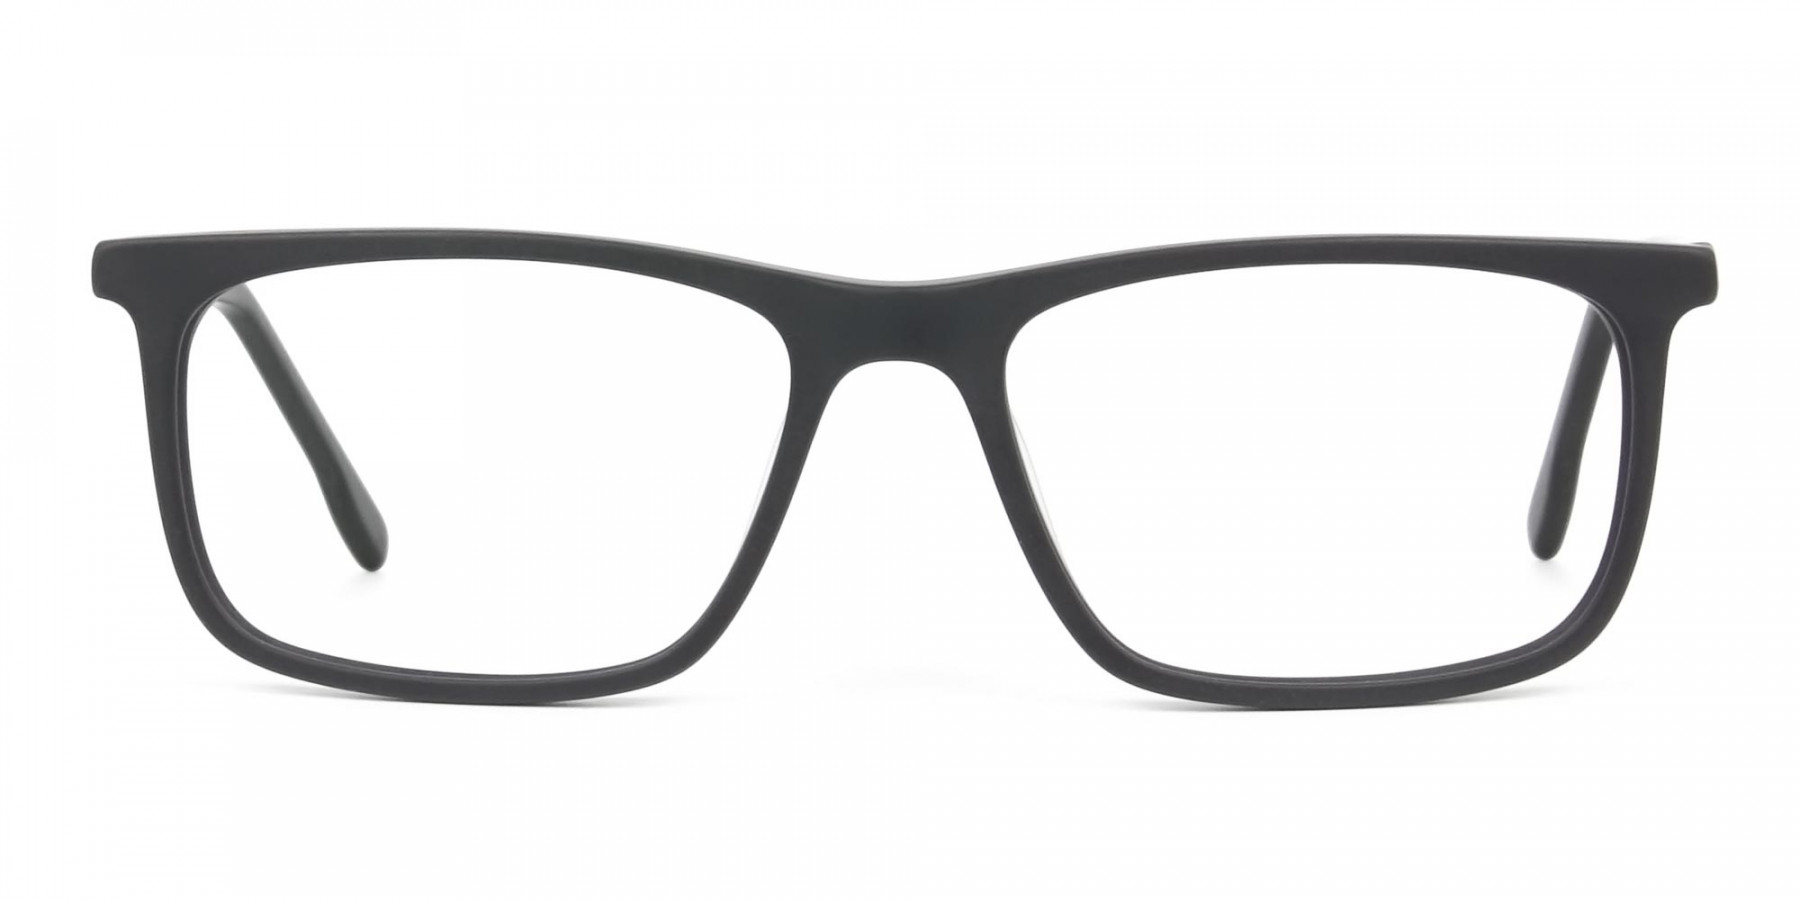 Matte Black & Blue Spectacles in Rectangular - 1